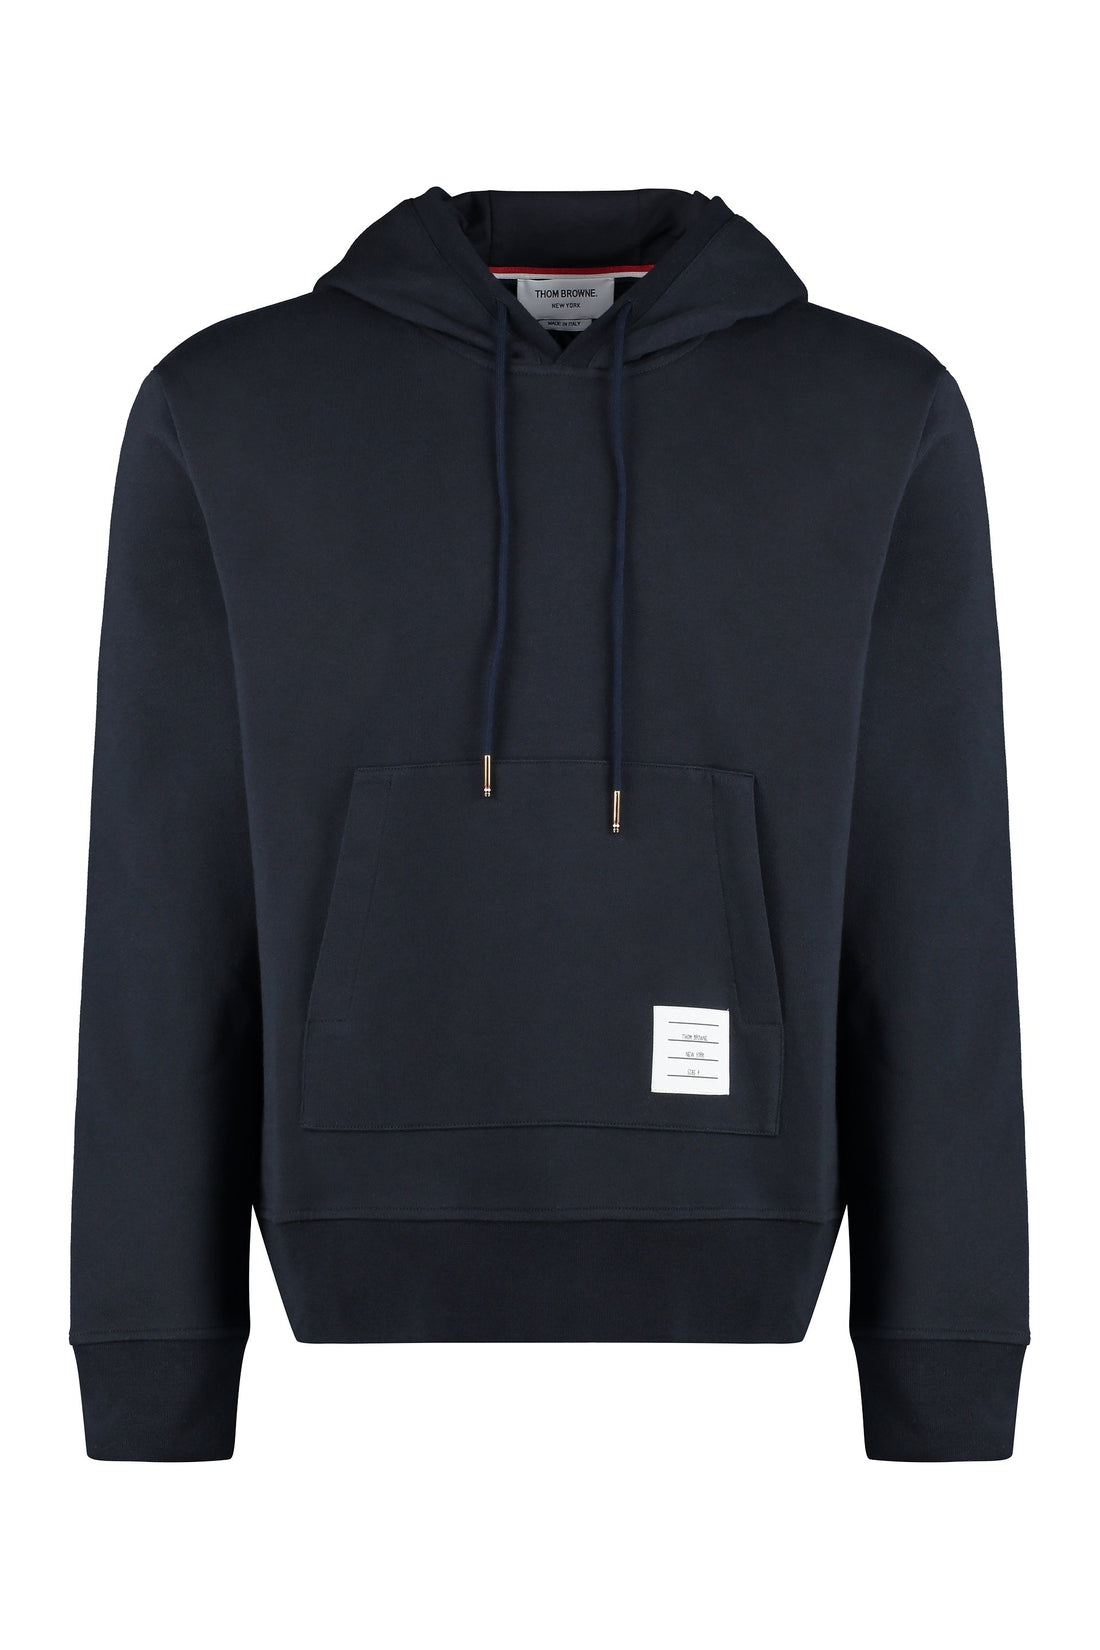 Thom Browne-OUTLET-SALE-Logo cotton hoodie-ARCHIVIST